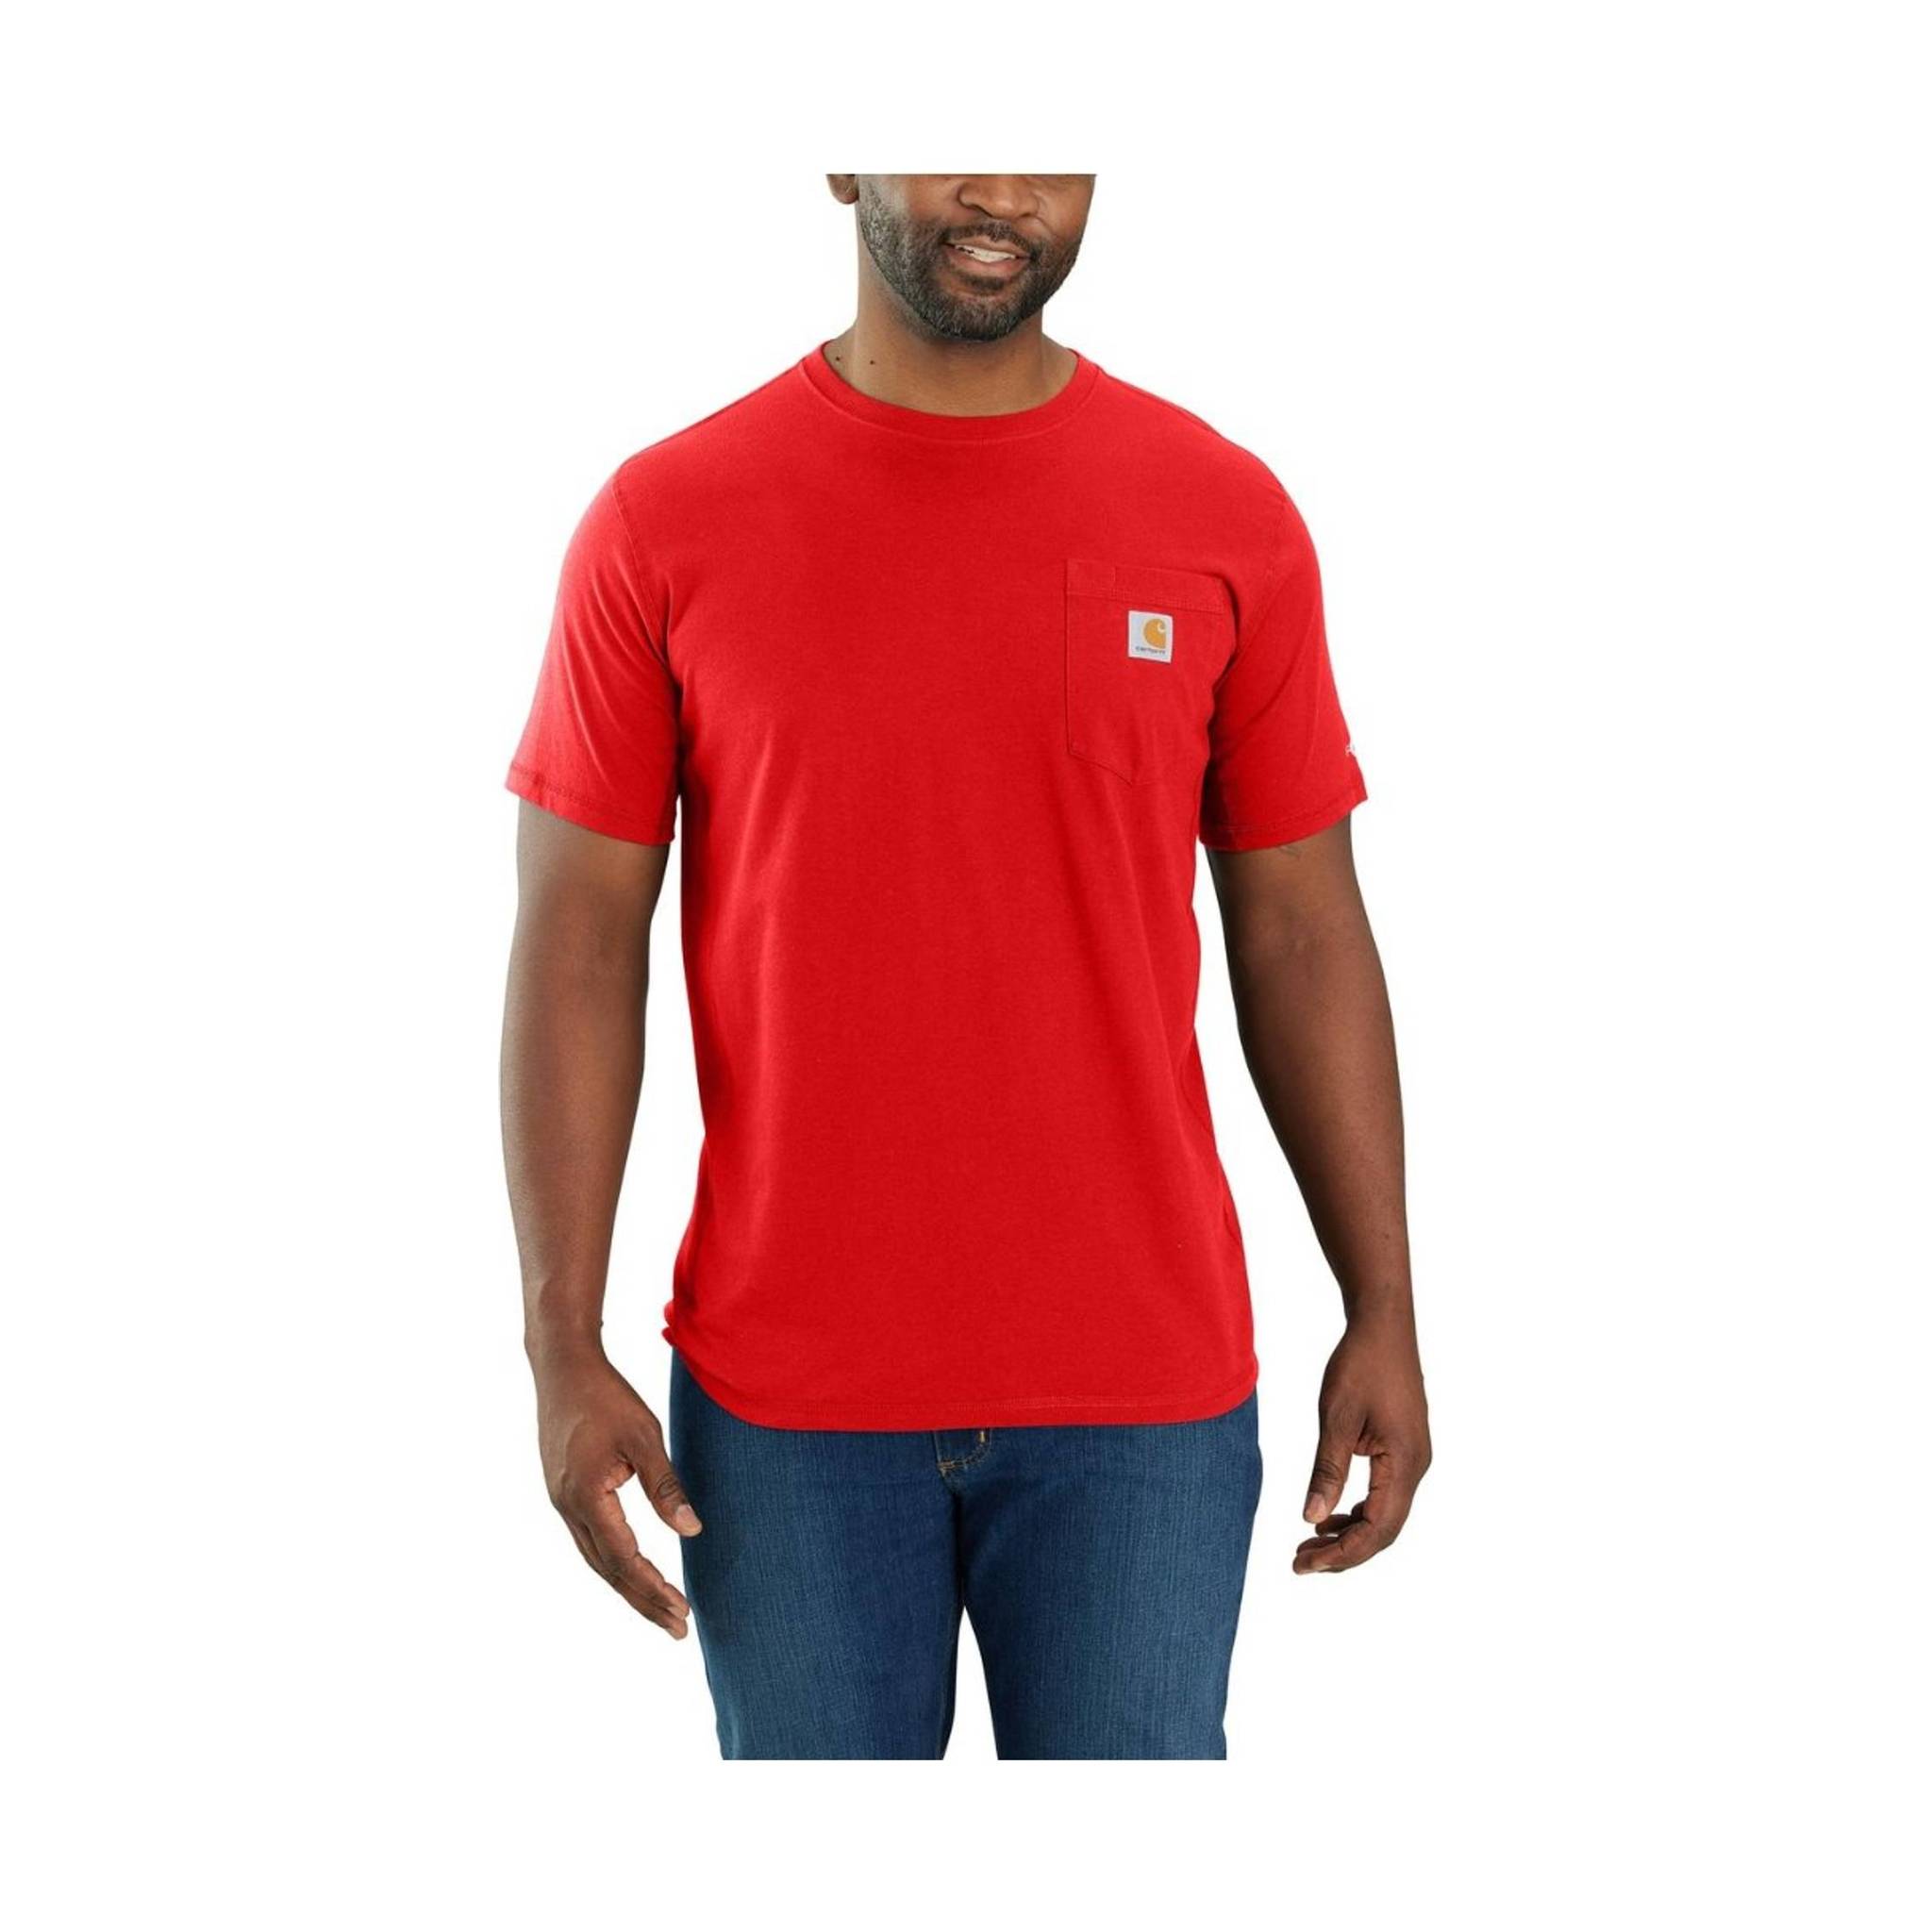 Carhartt Men's Force Relaxed Fit Short-Sleeve Pocket T-Shirt - Fire Red